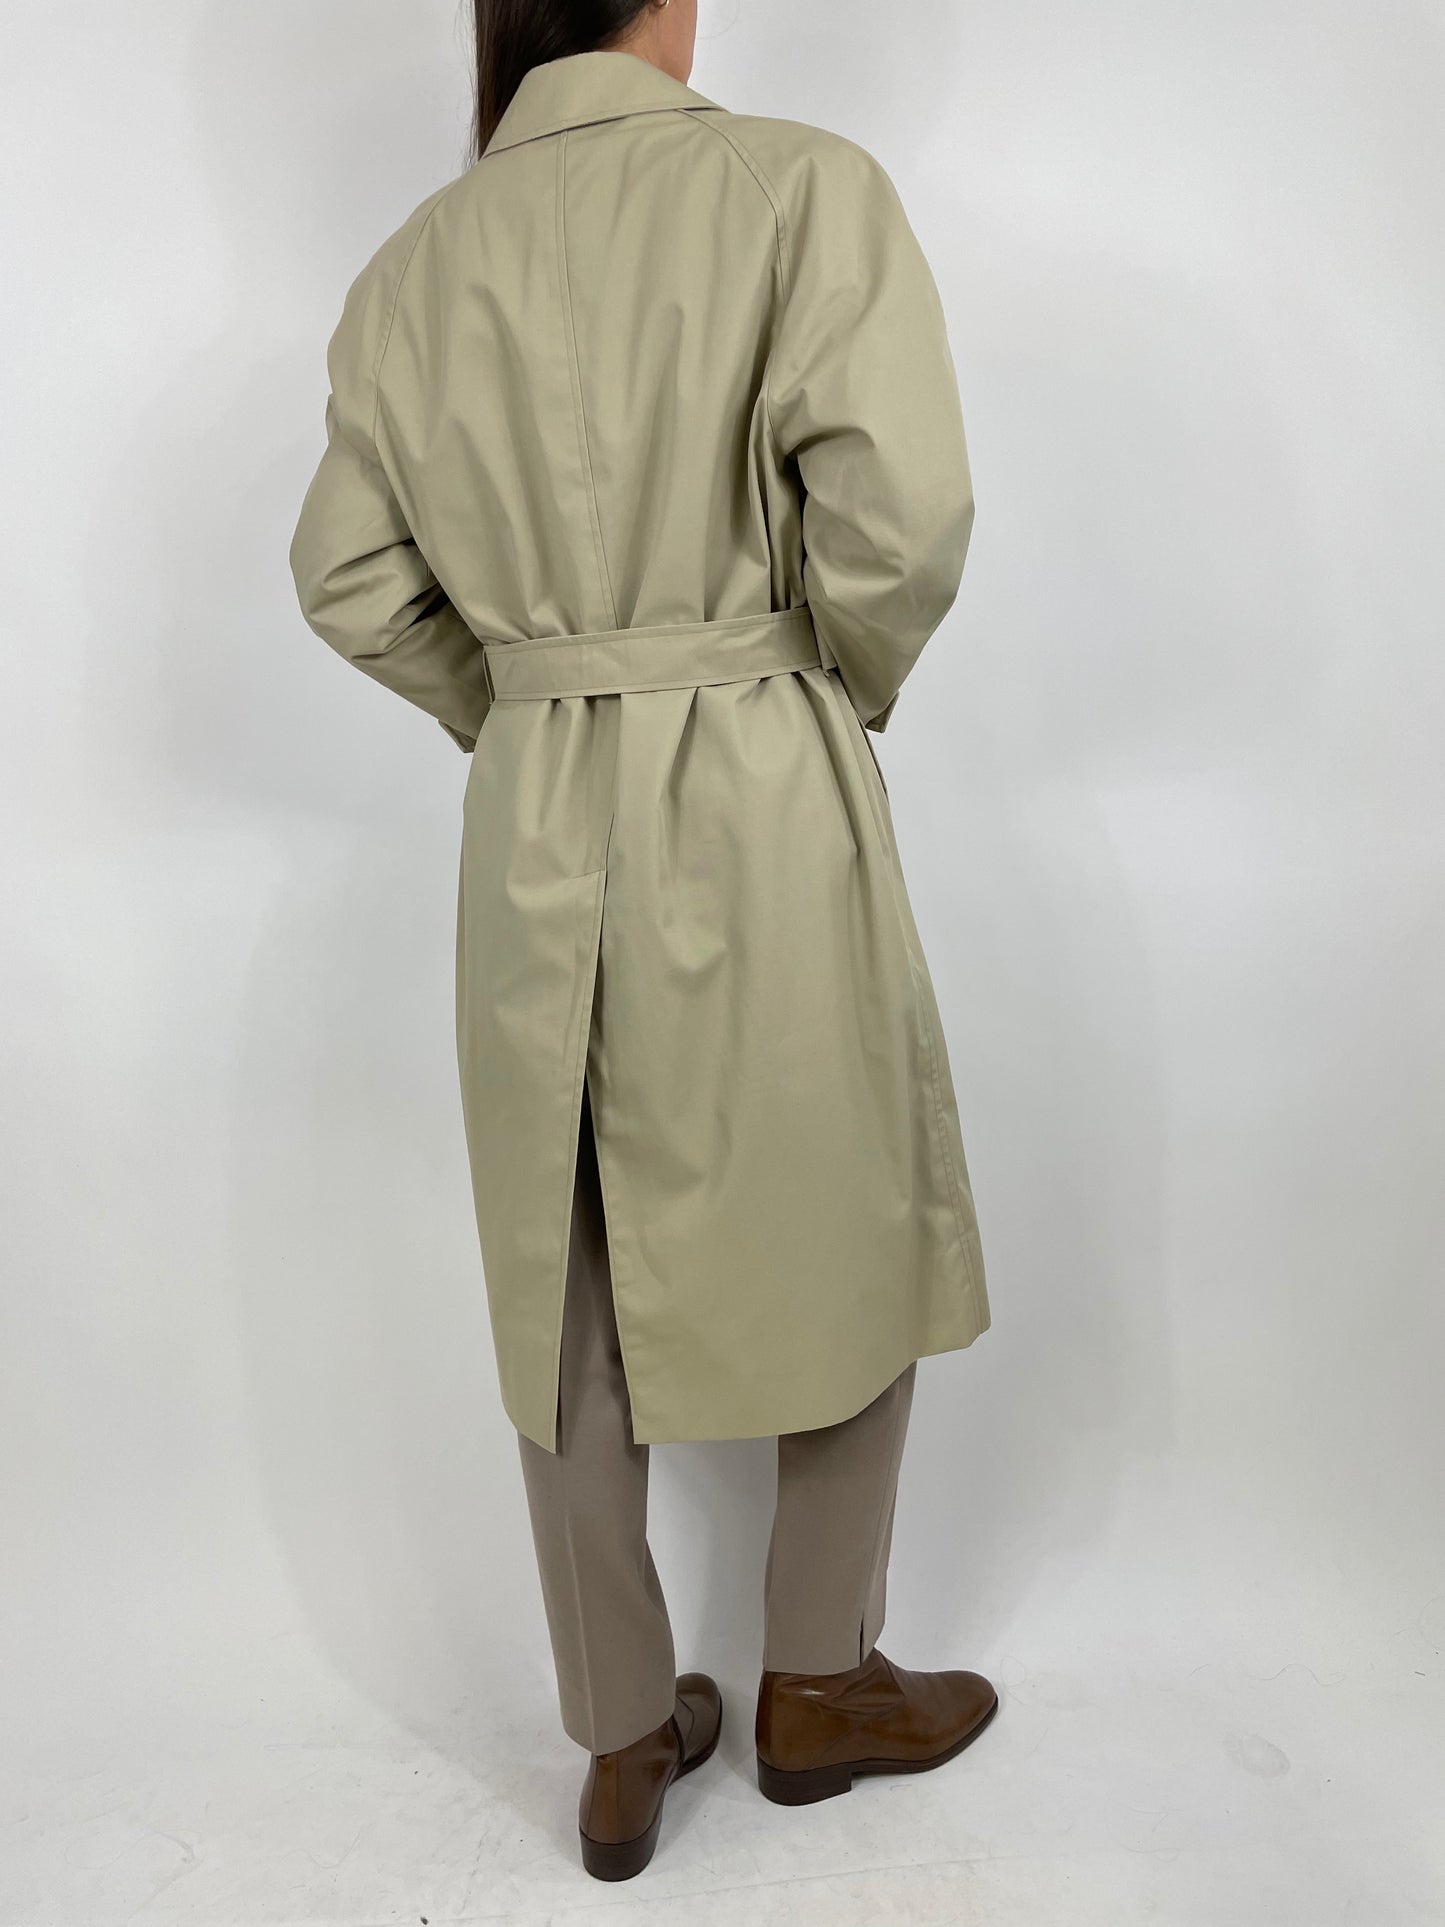 Bertelli's trench coat